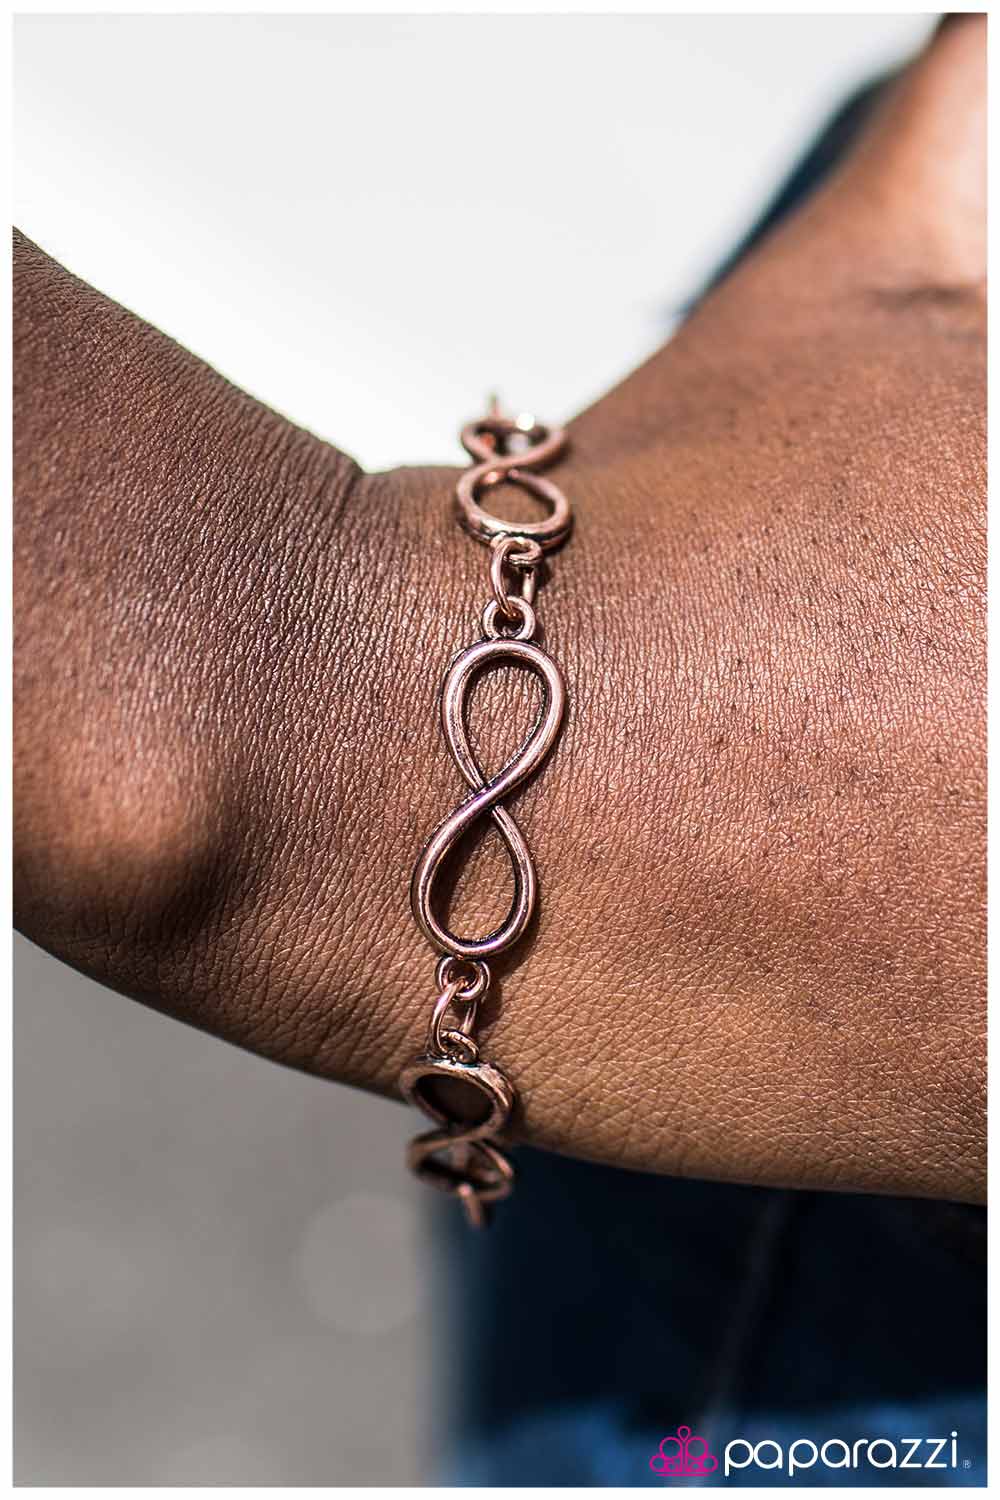 Forever Yours - copper - Paparazzi bracelet